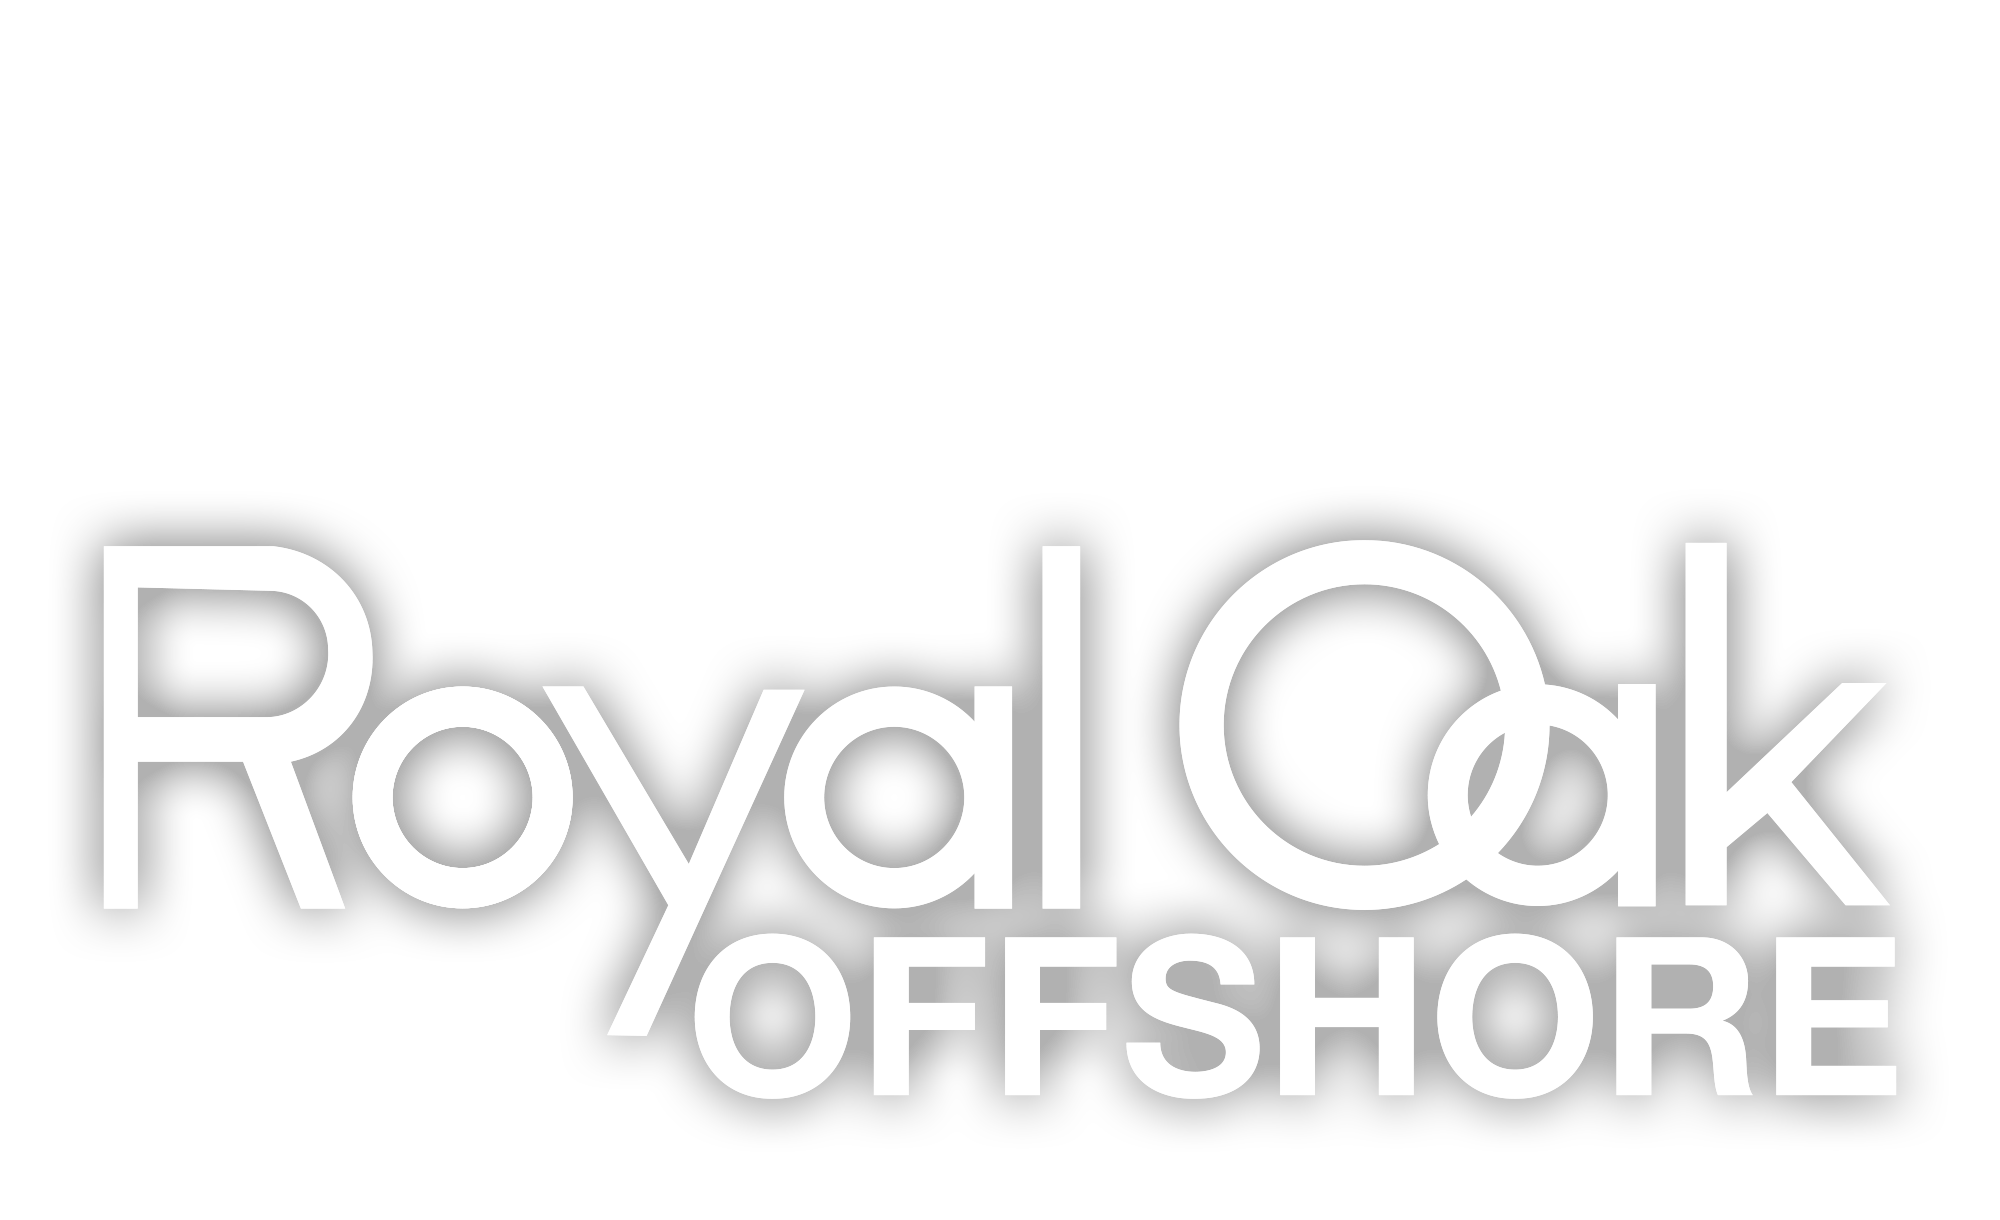 Royal Oak Offshore Collection